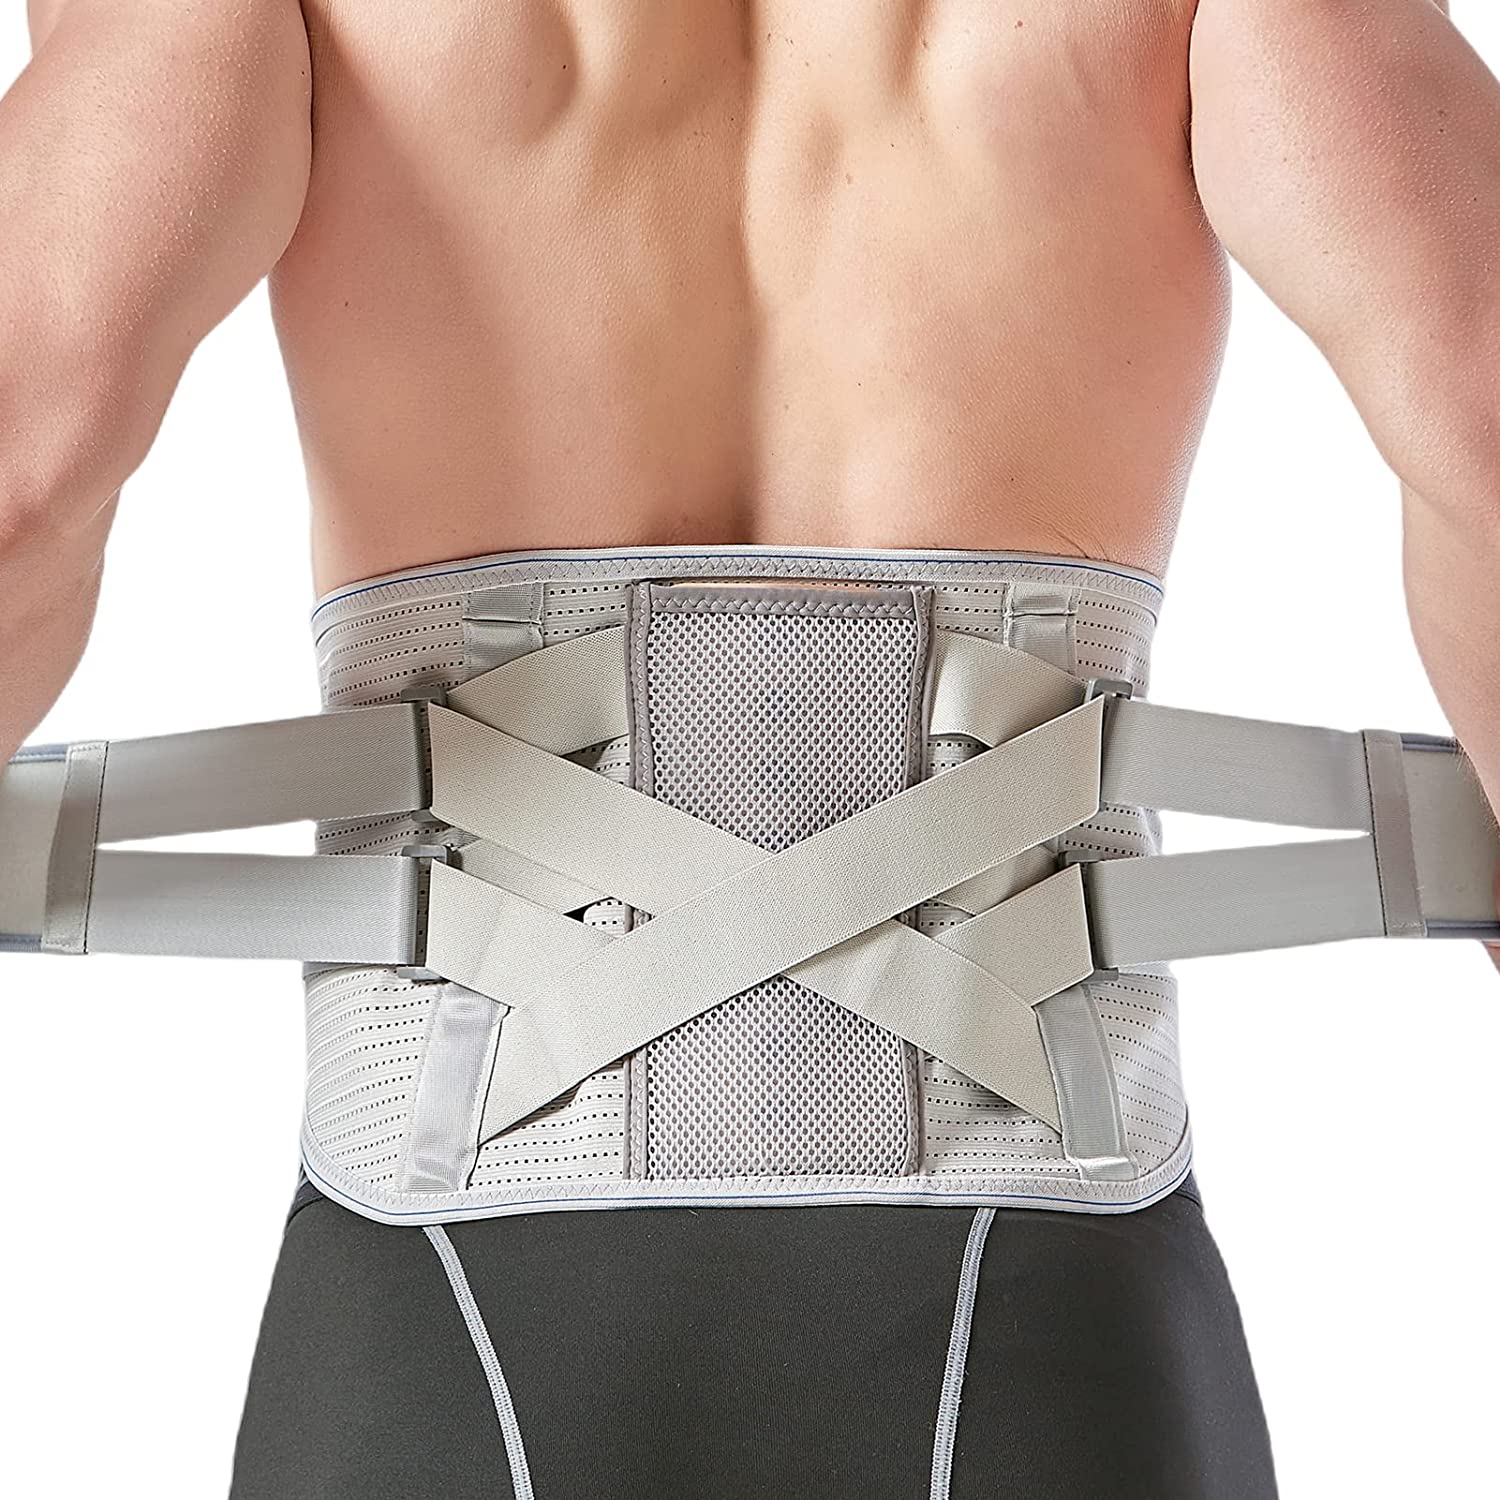 Lower Back Support Back Brace Pain Relief Lumbar Support Belt Sciatica Men  Women